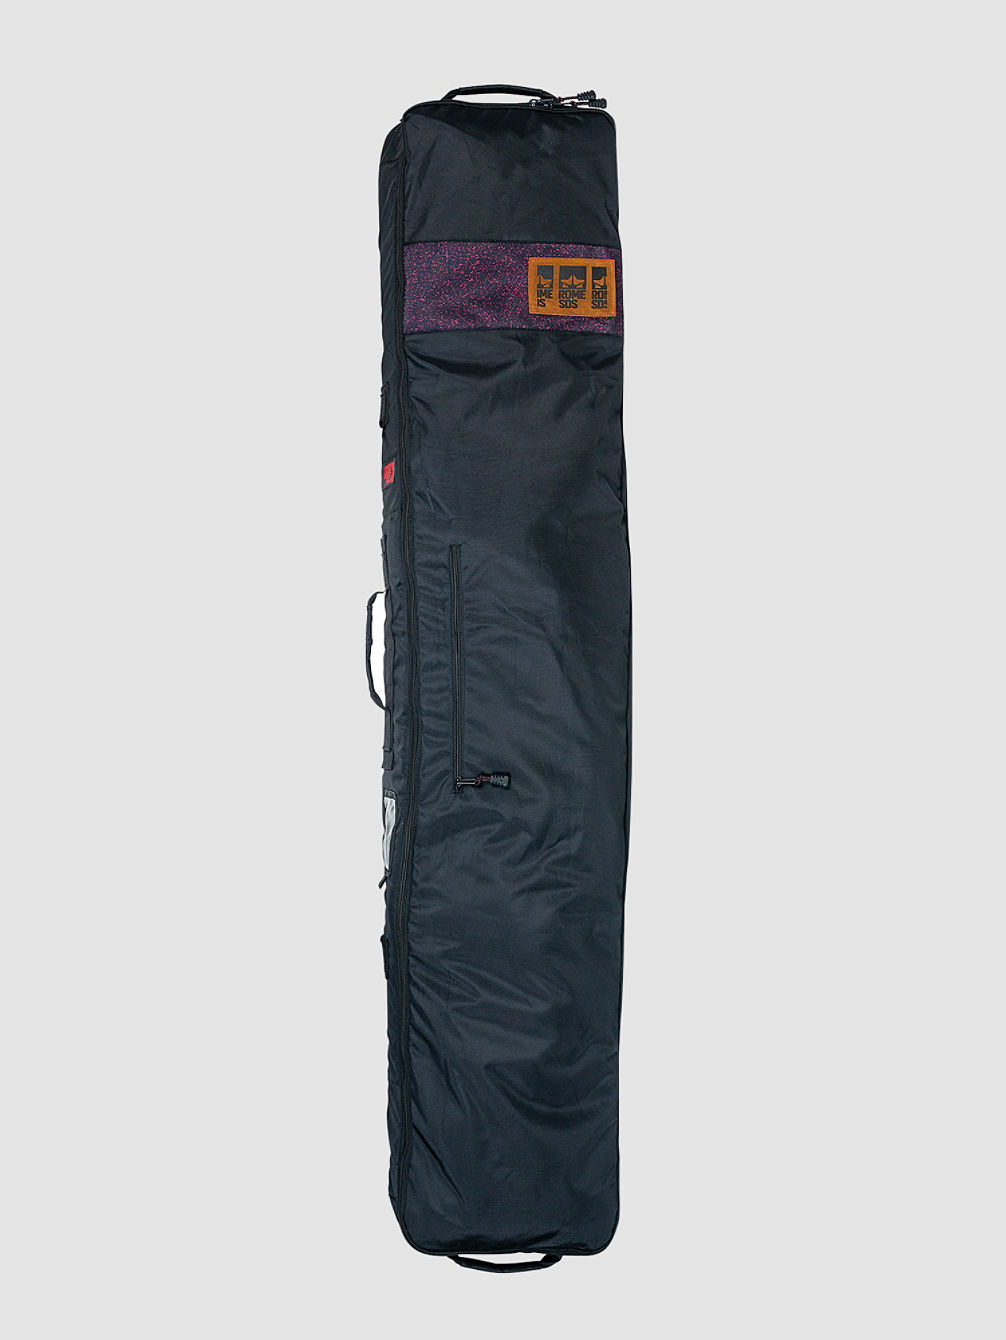 Nomad Snowboardbag